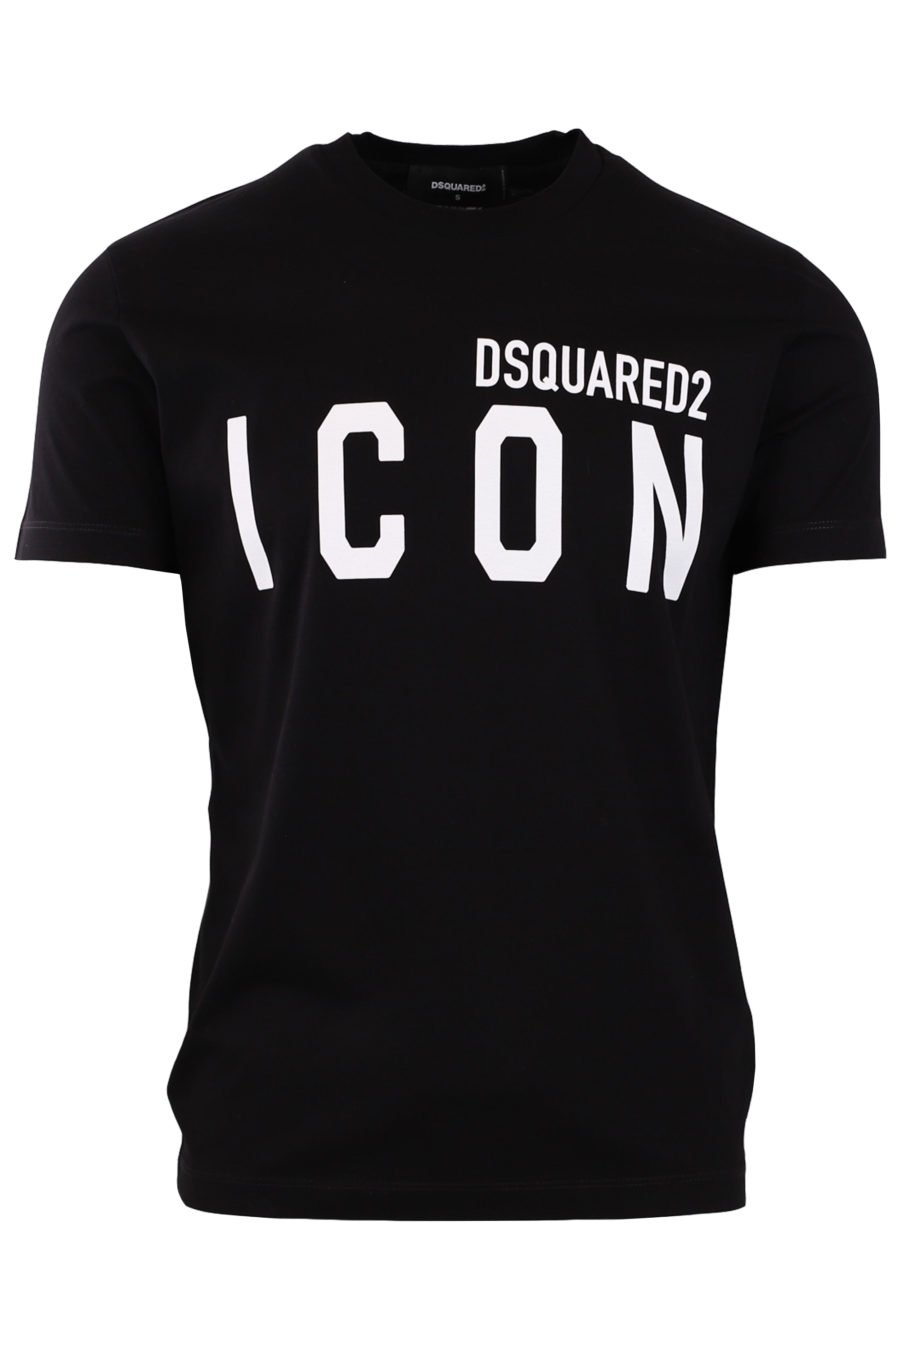 Camiseta negra con logotipo "Icon" - a7a7167122b884fcc31f76c9b13854c9531b0865